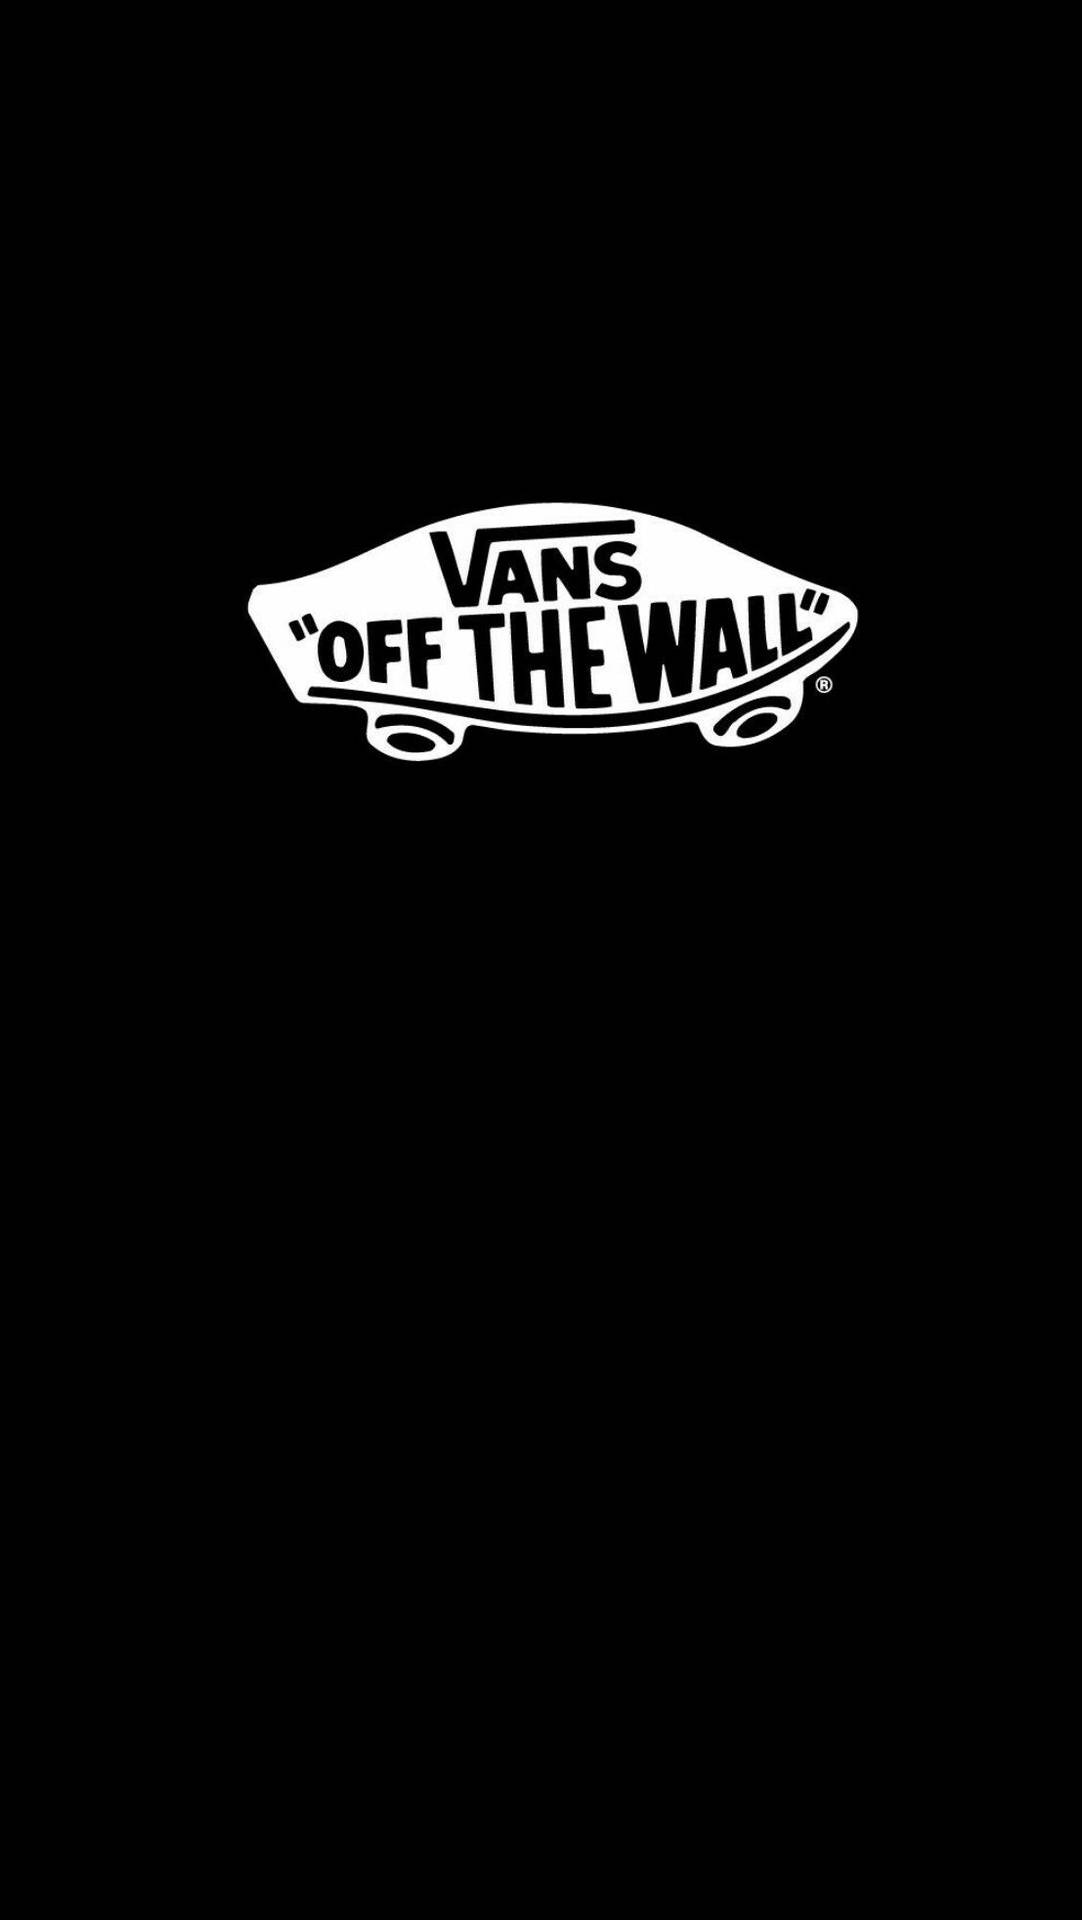 waffle vans wallpaper hd